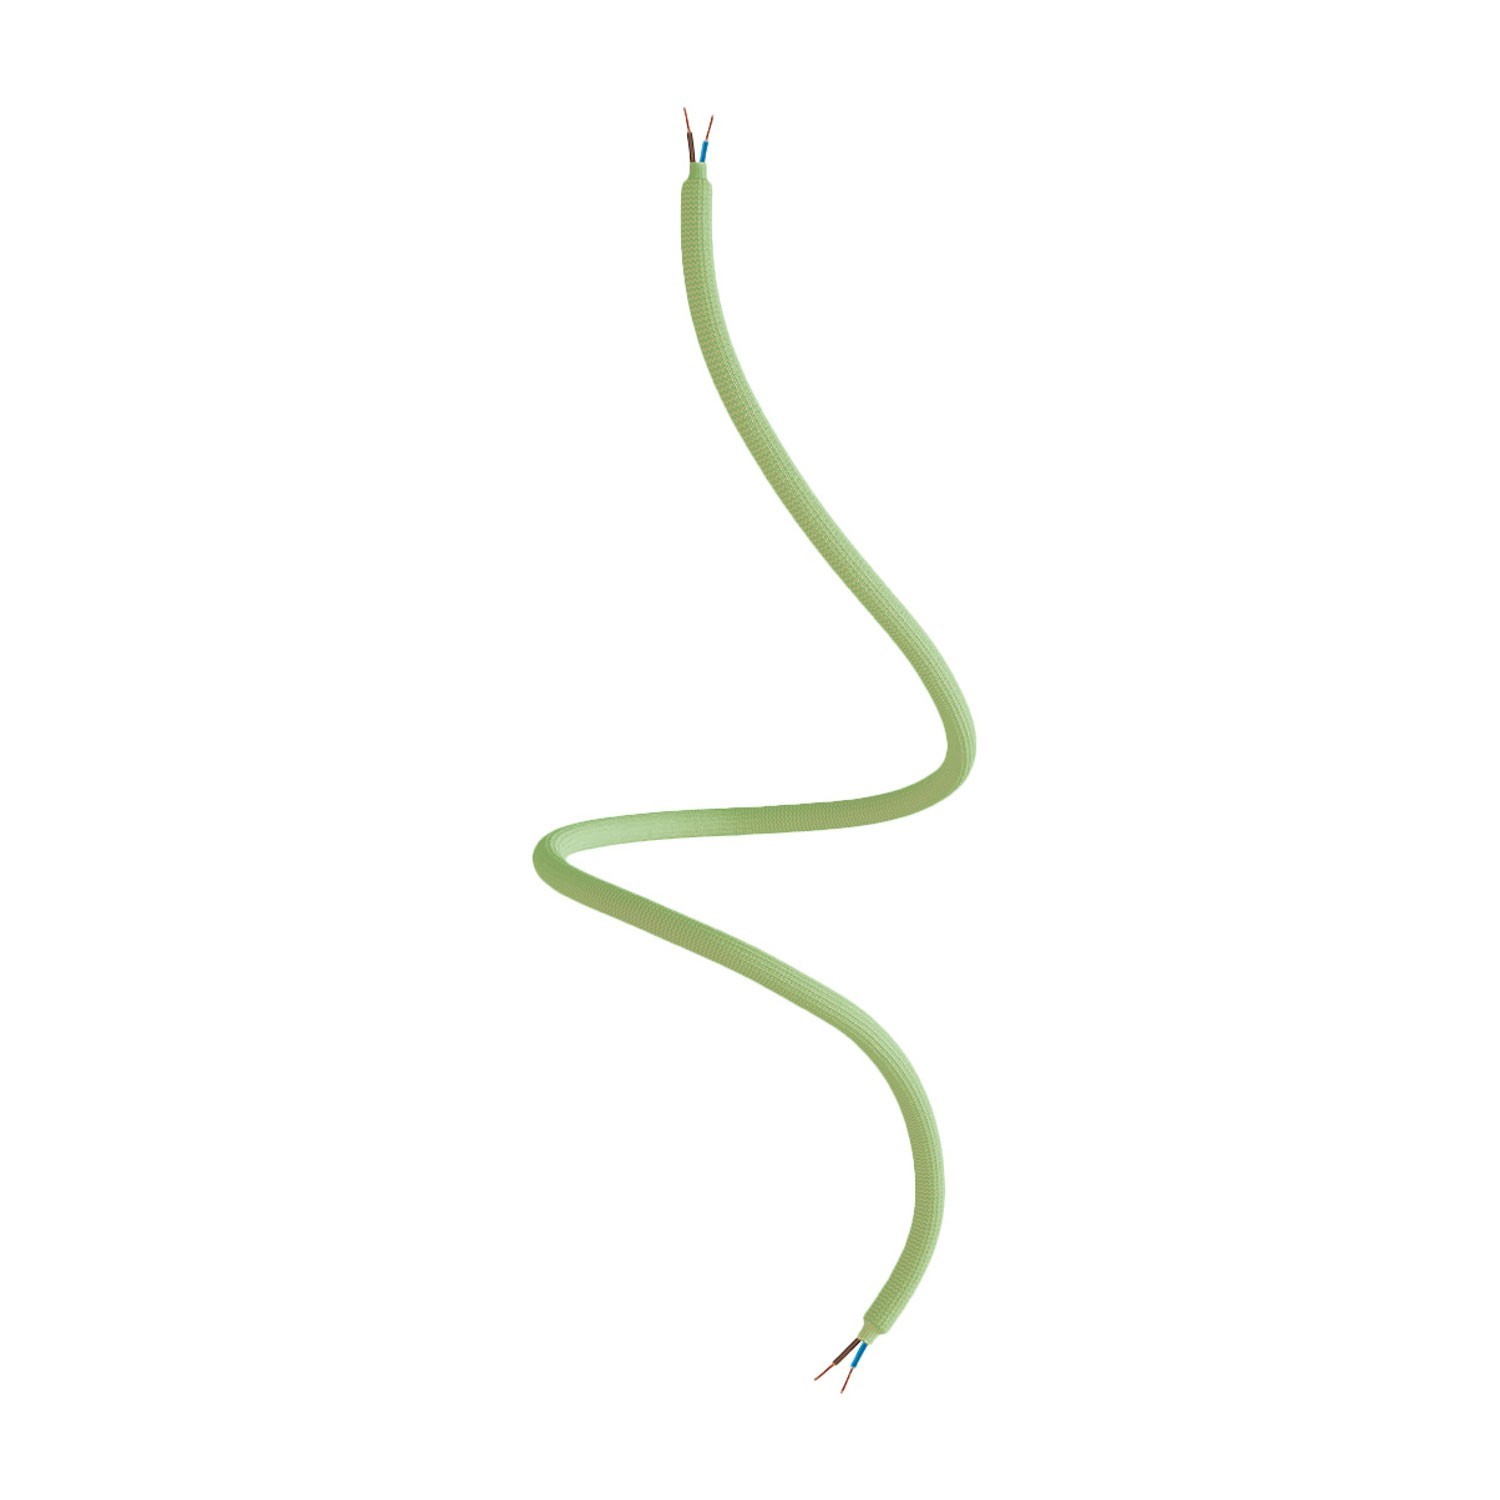 Creative Flex flexible tube in grass green RM77 textile lining